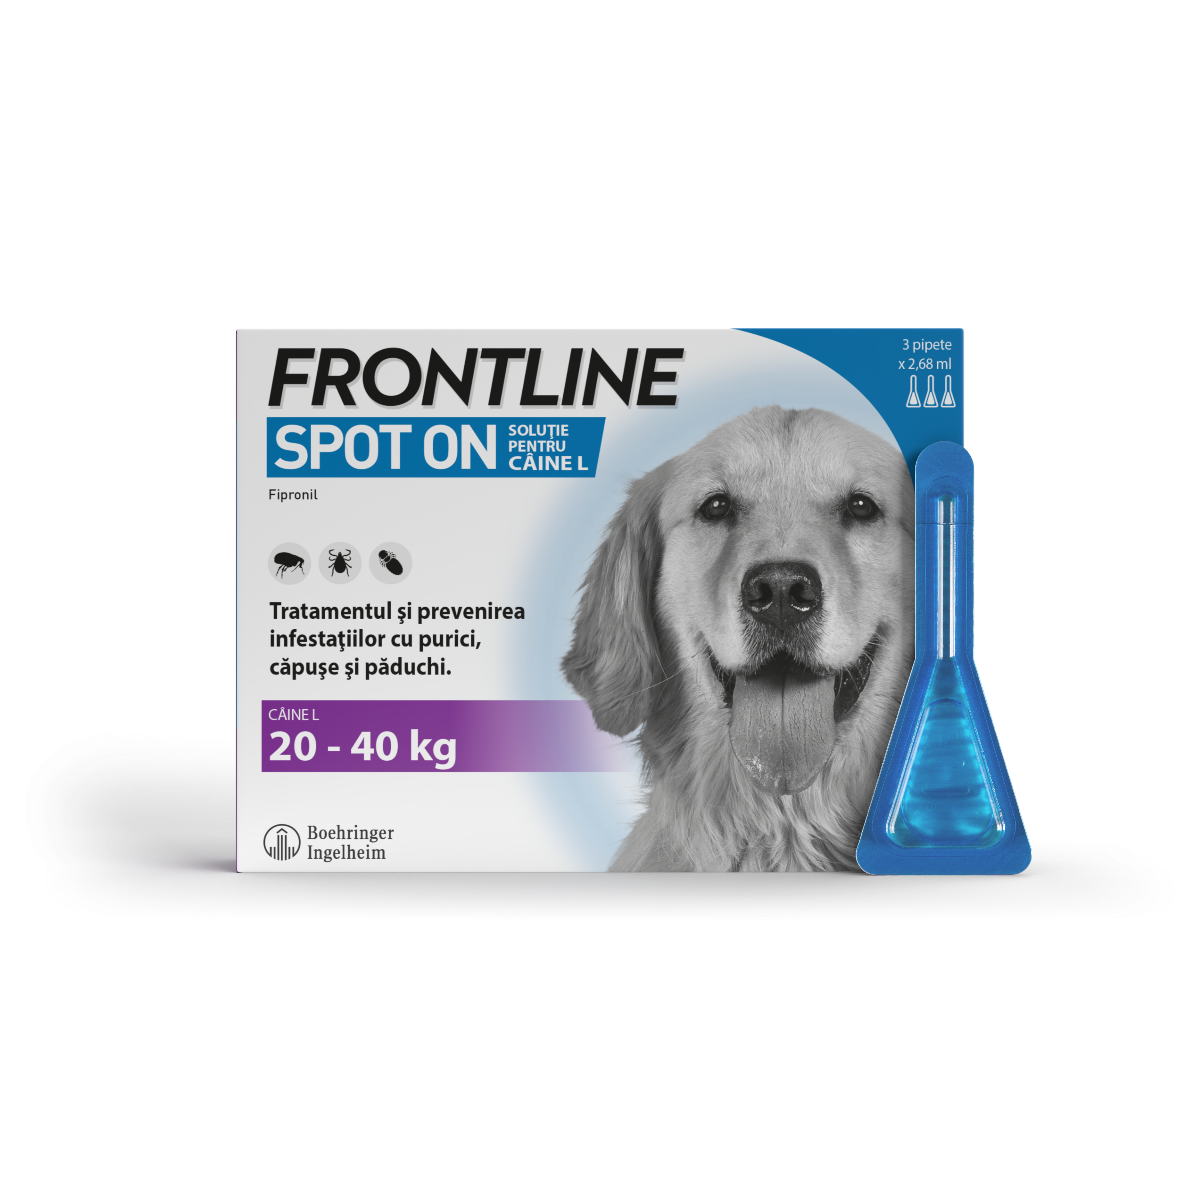 Frontline Spot On L pentru caini 20-40 kg, 3 pipete, Frontline